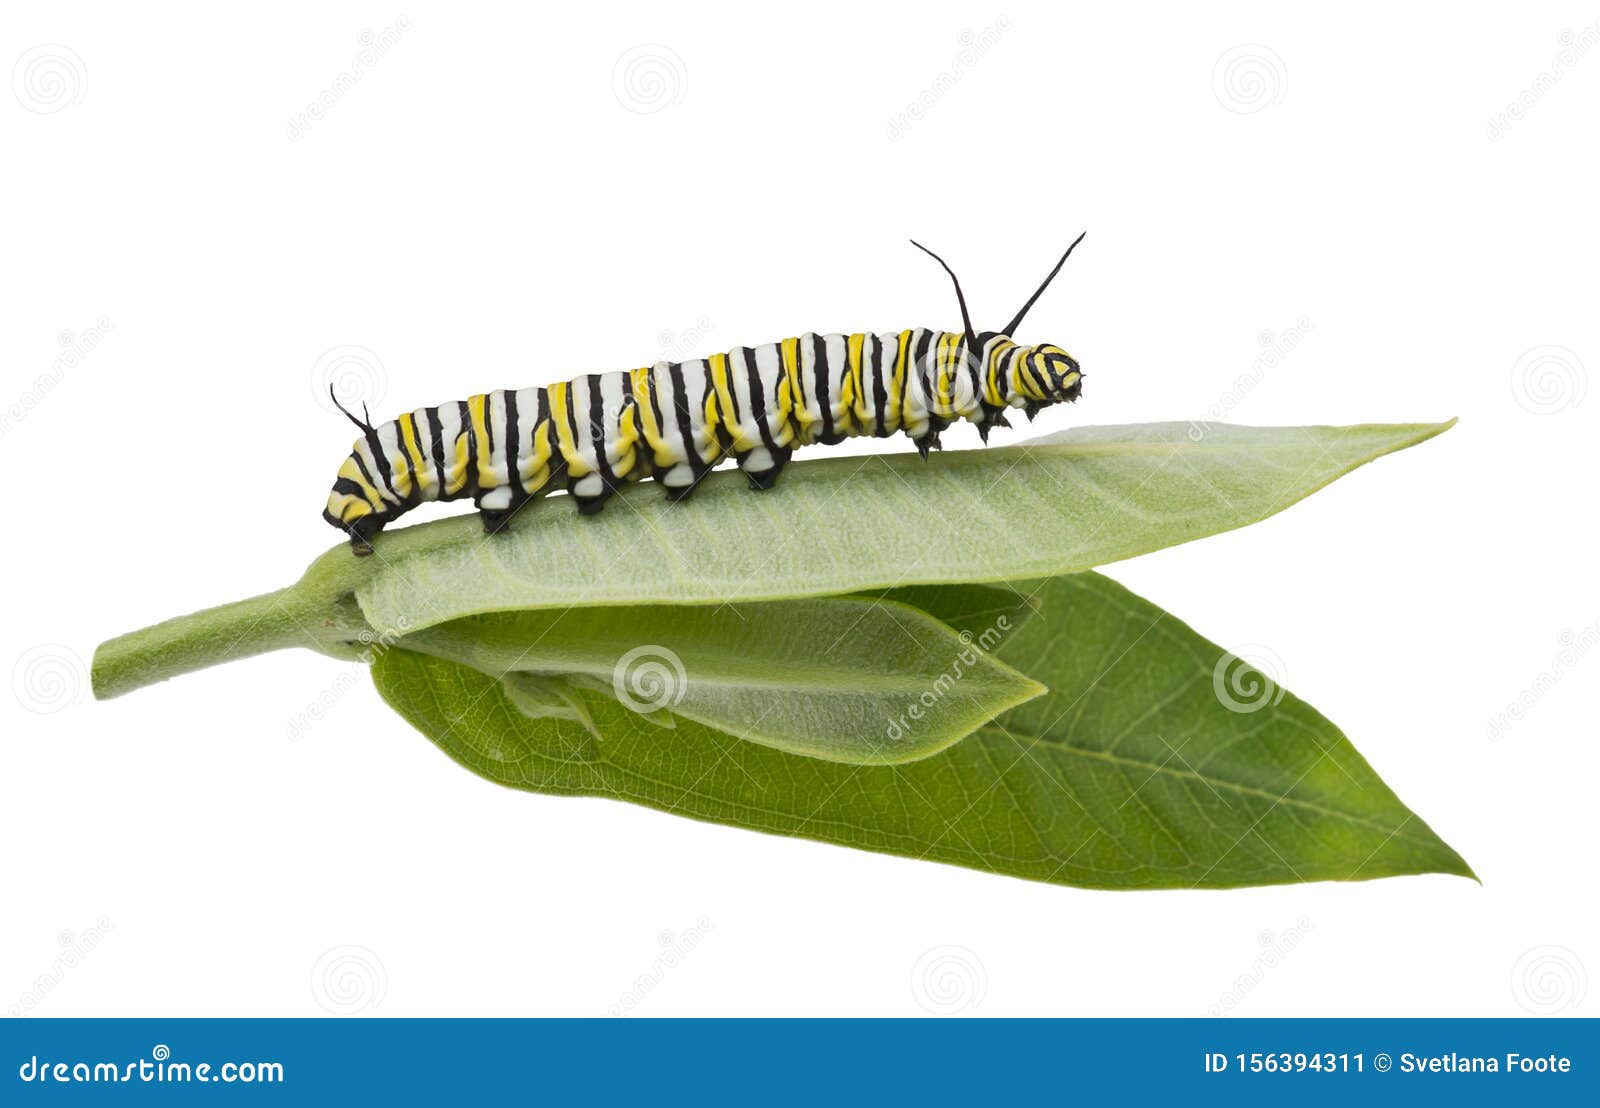 monarch caterpillar on milkweed leaf  on white